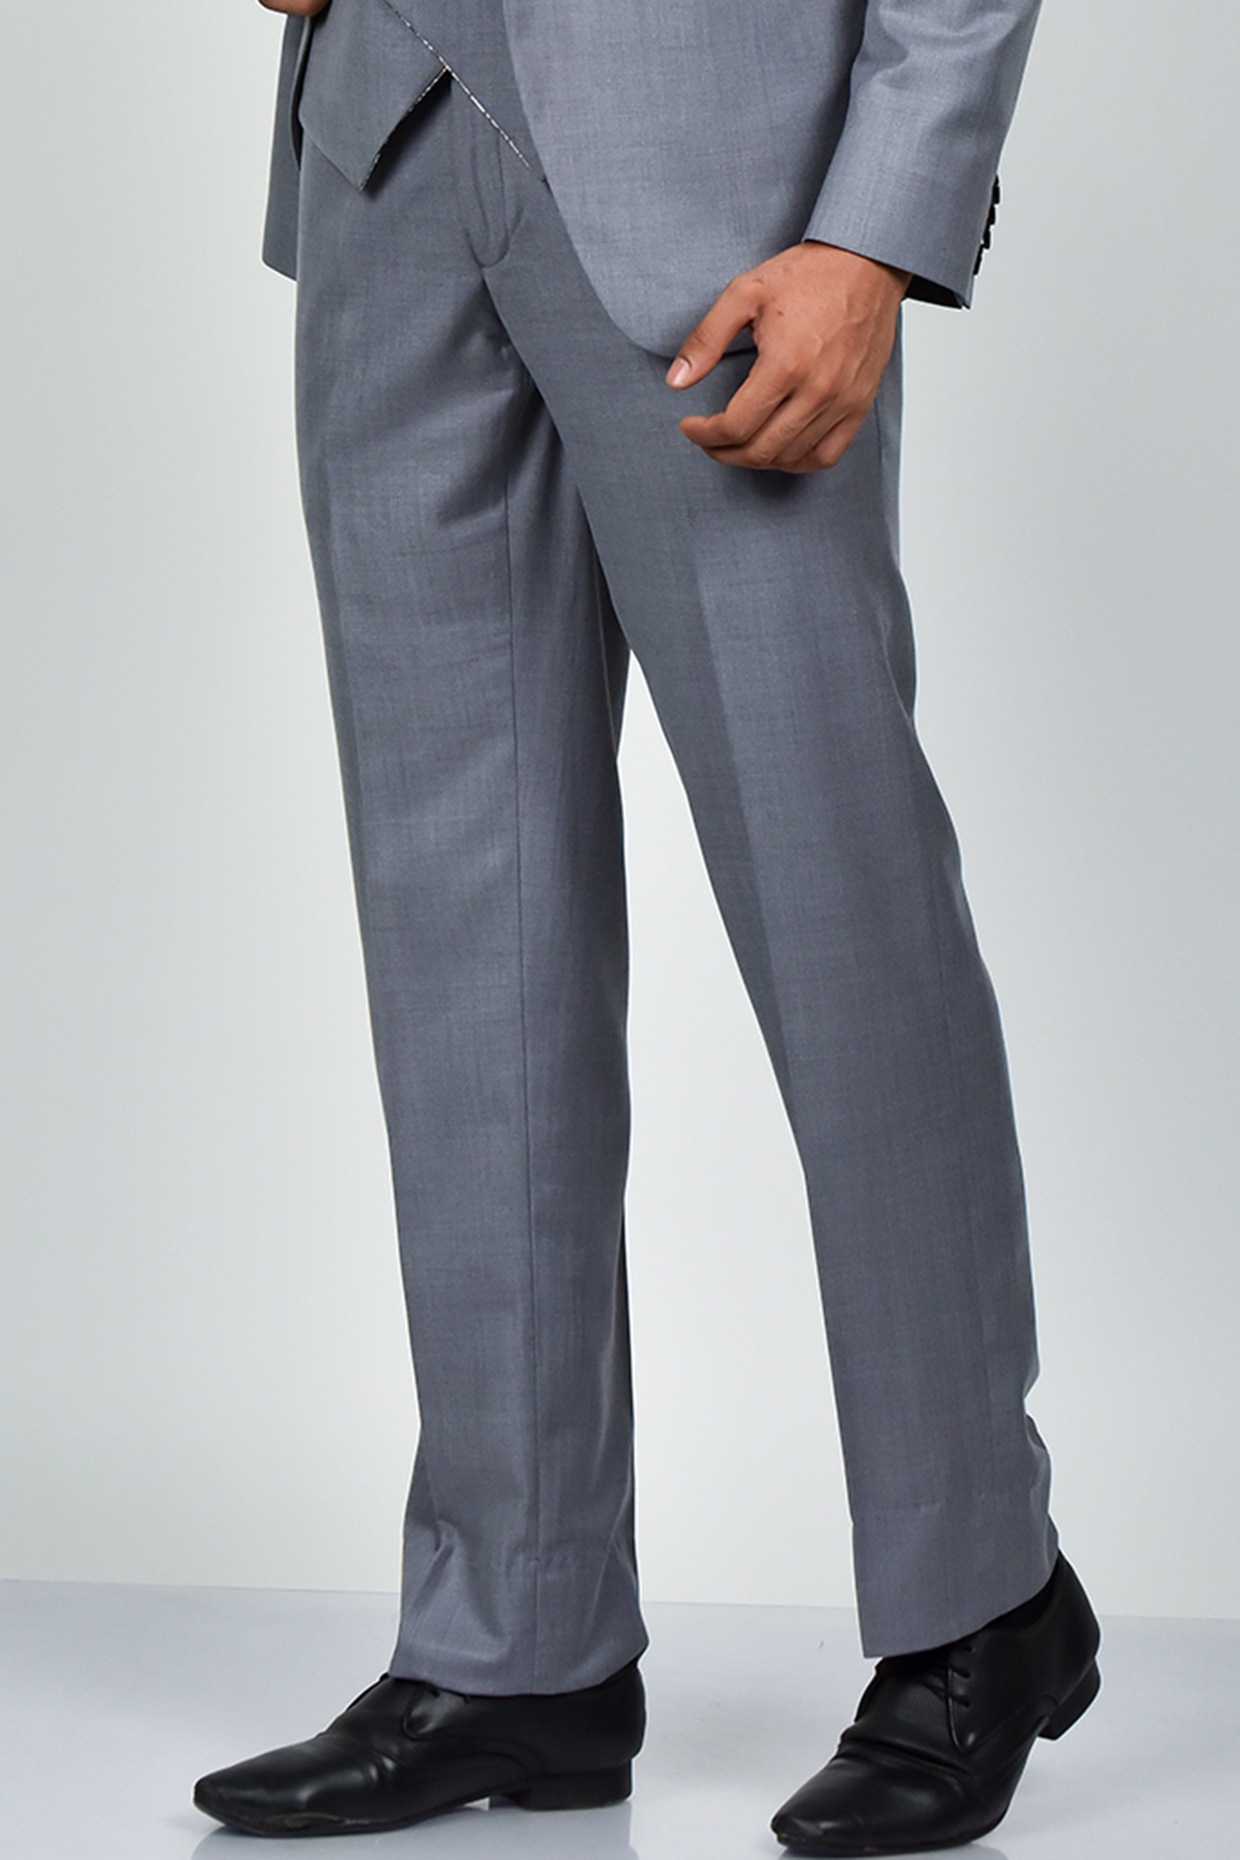 New Look slim suit trousers in dark grey texture | ASOS